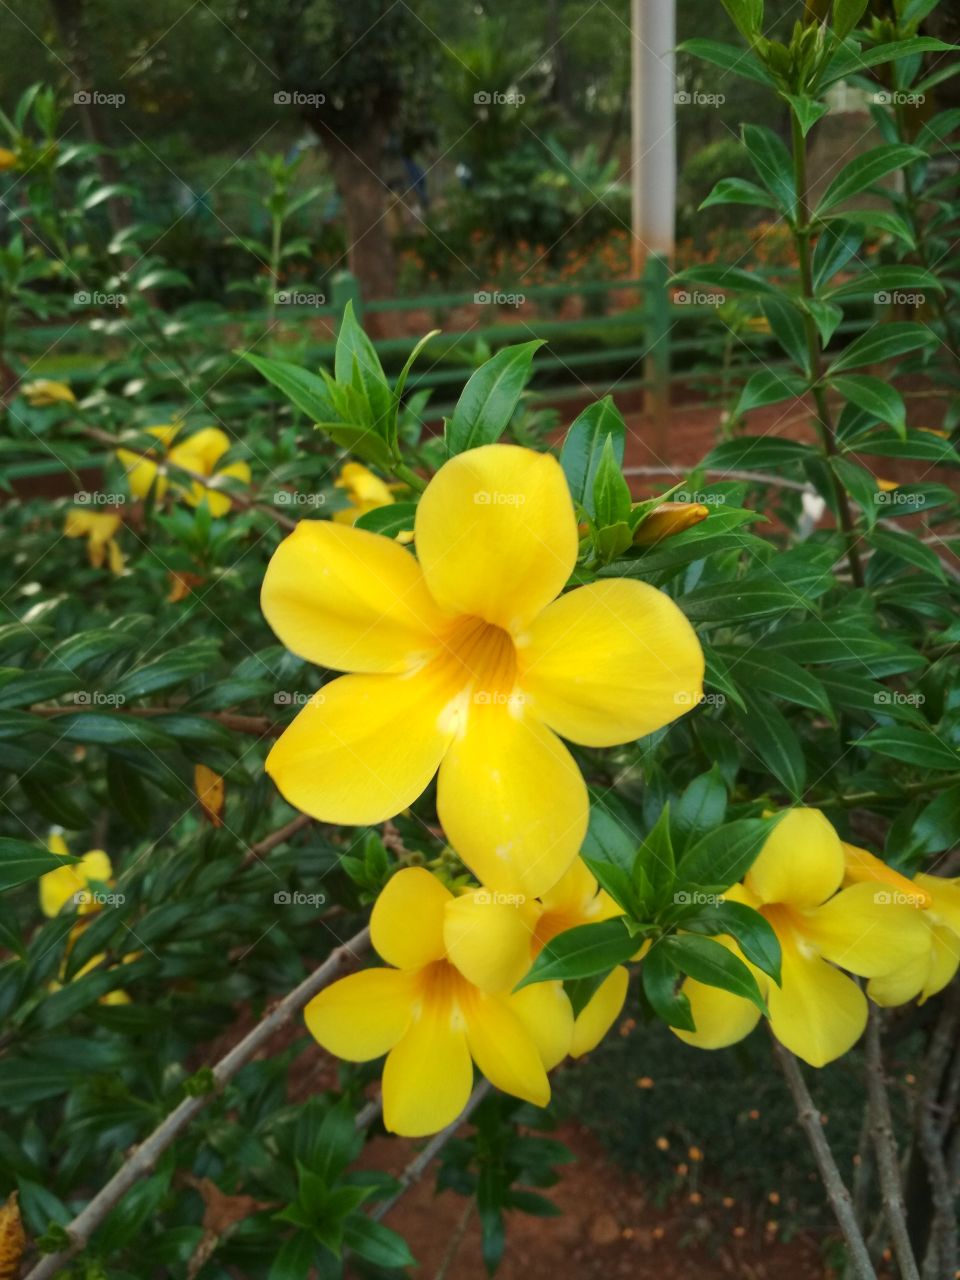 Beauty of yellow